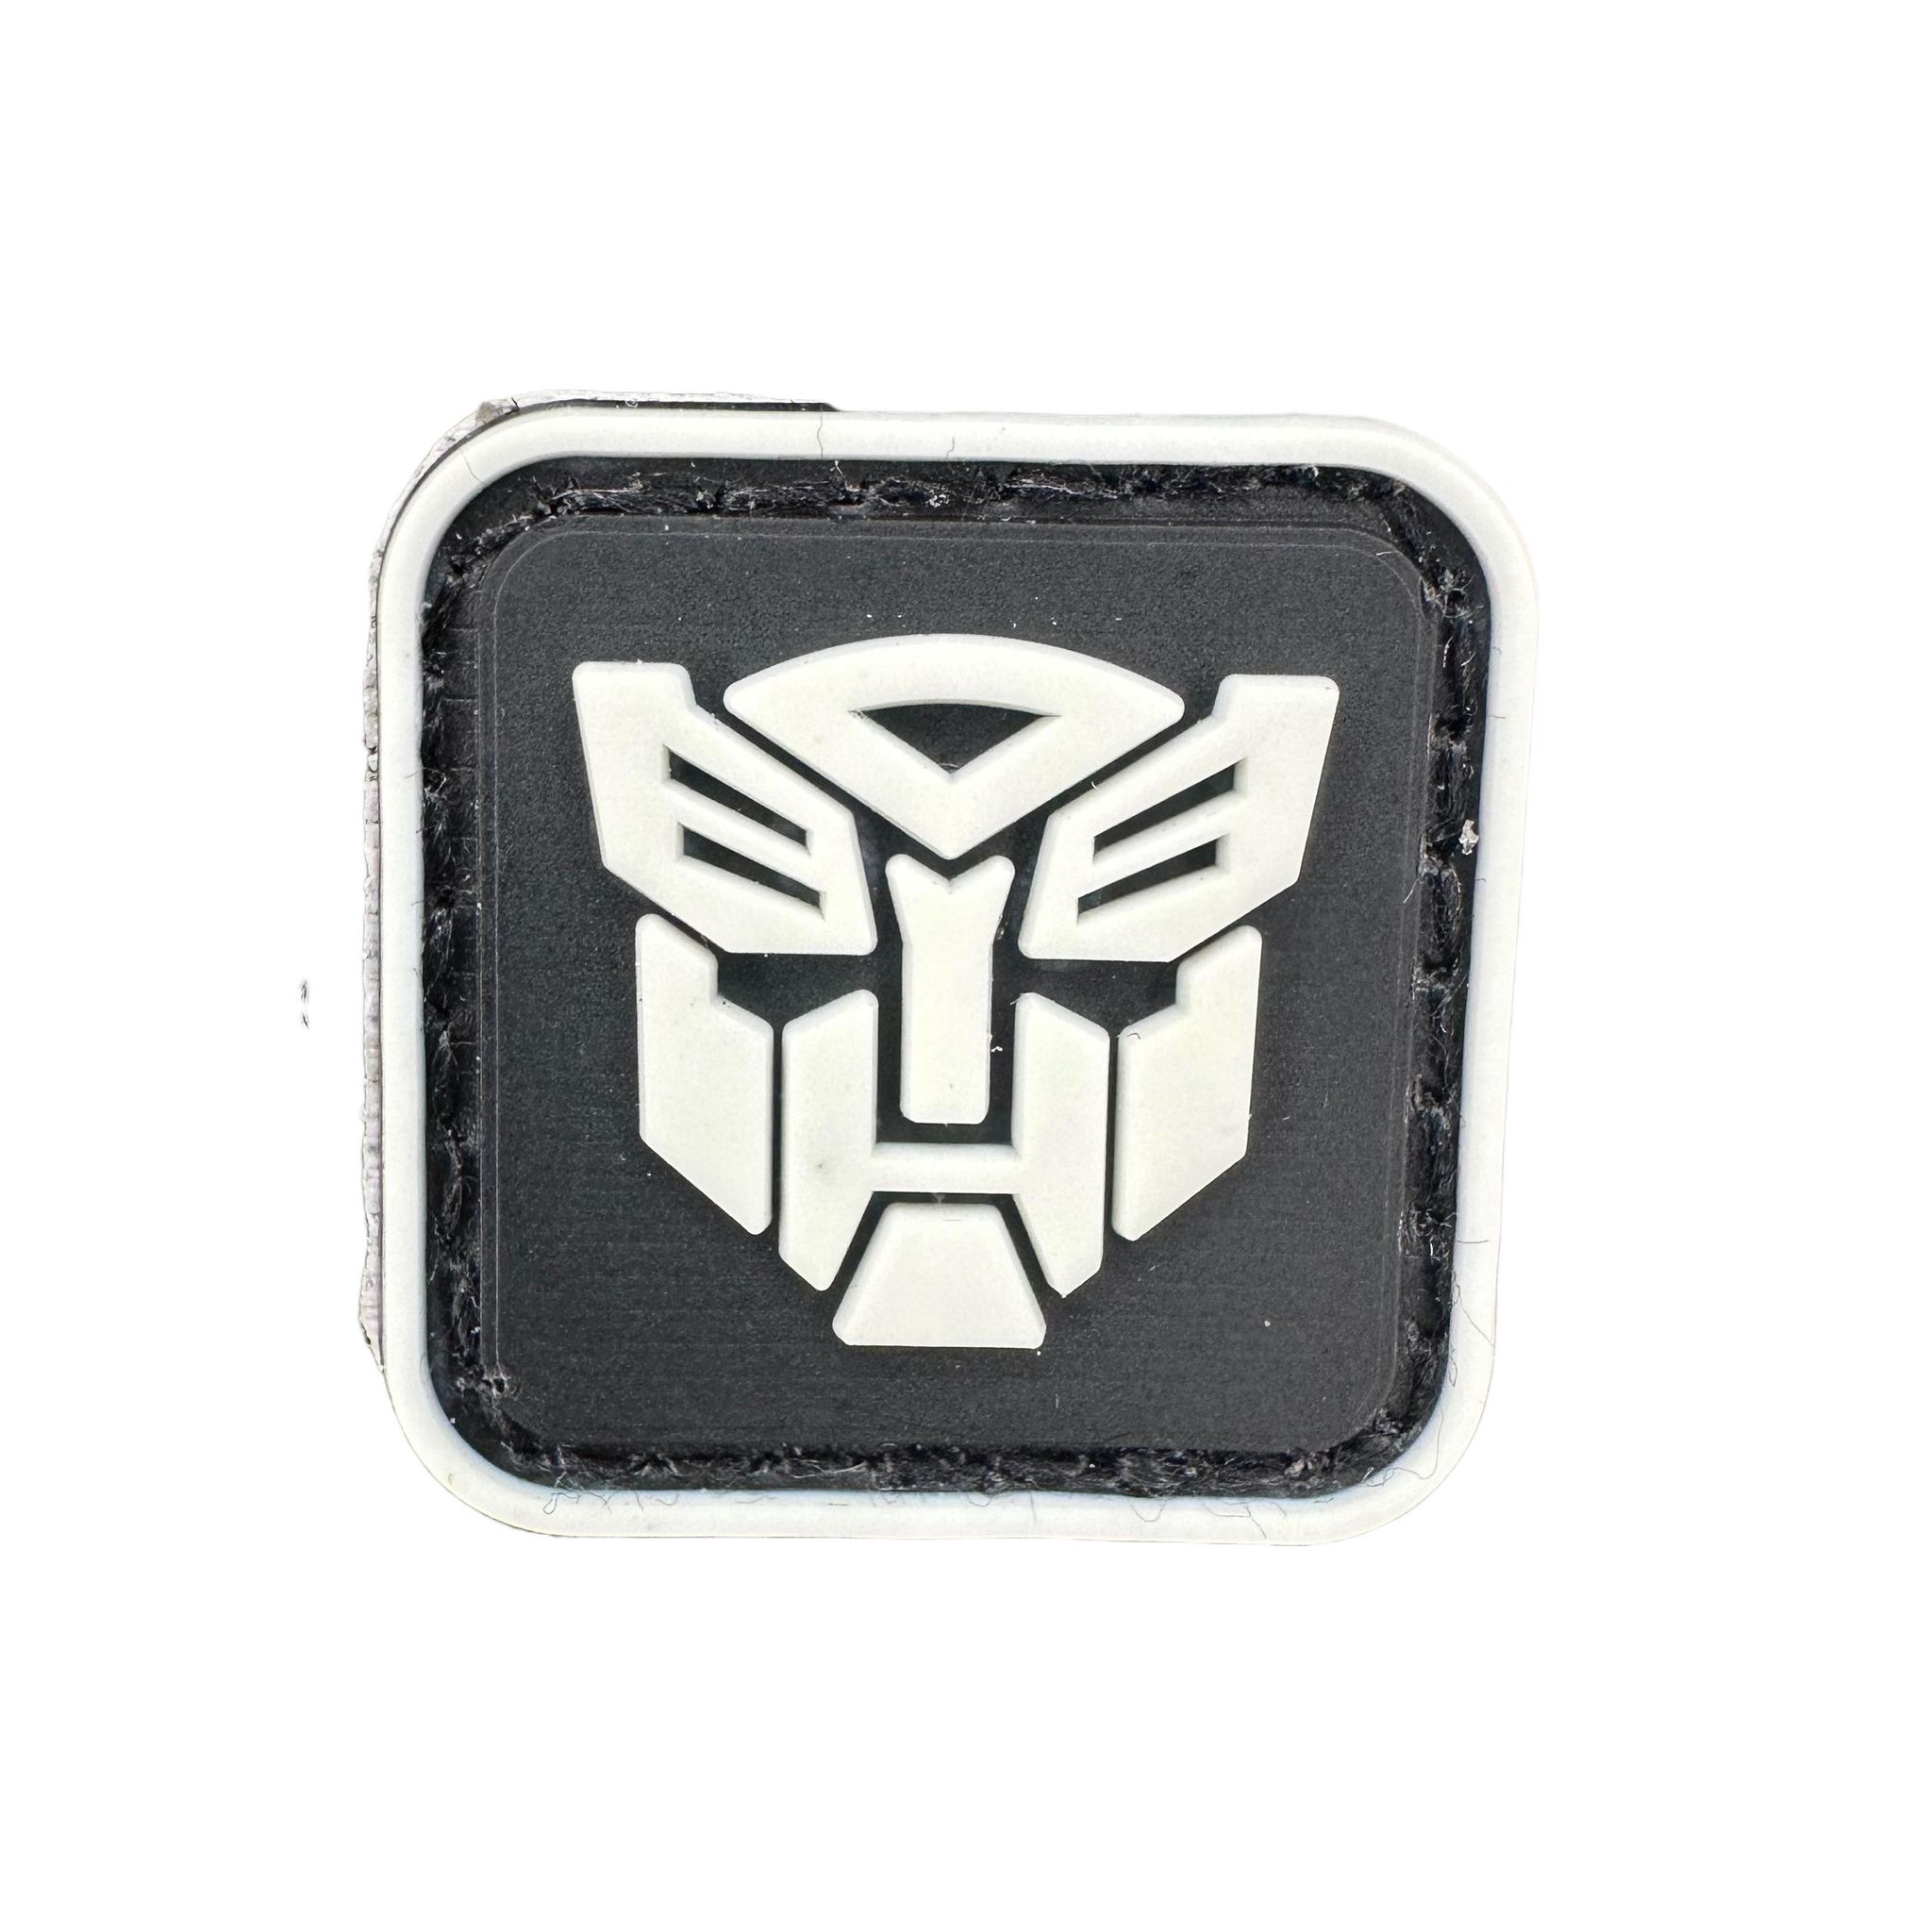 Rubber Patch - Autobots Transformers (GITD)